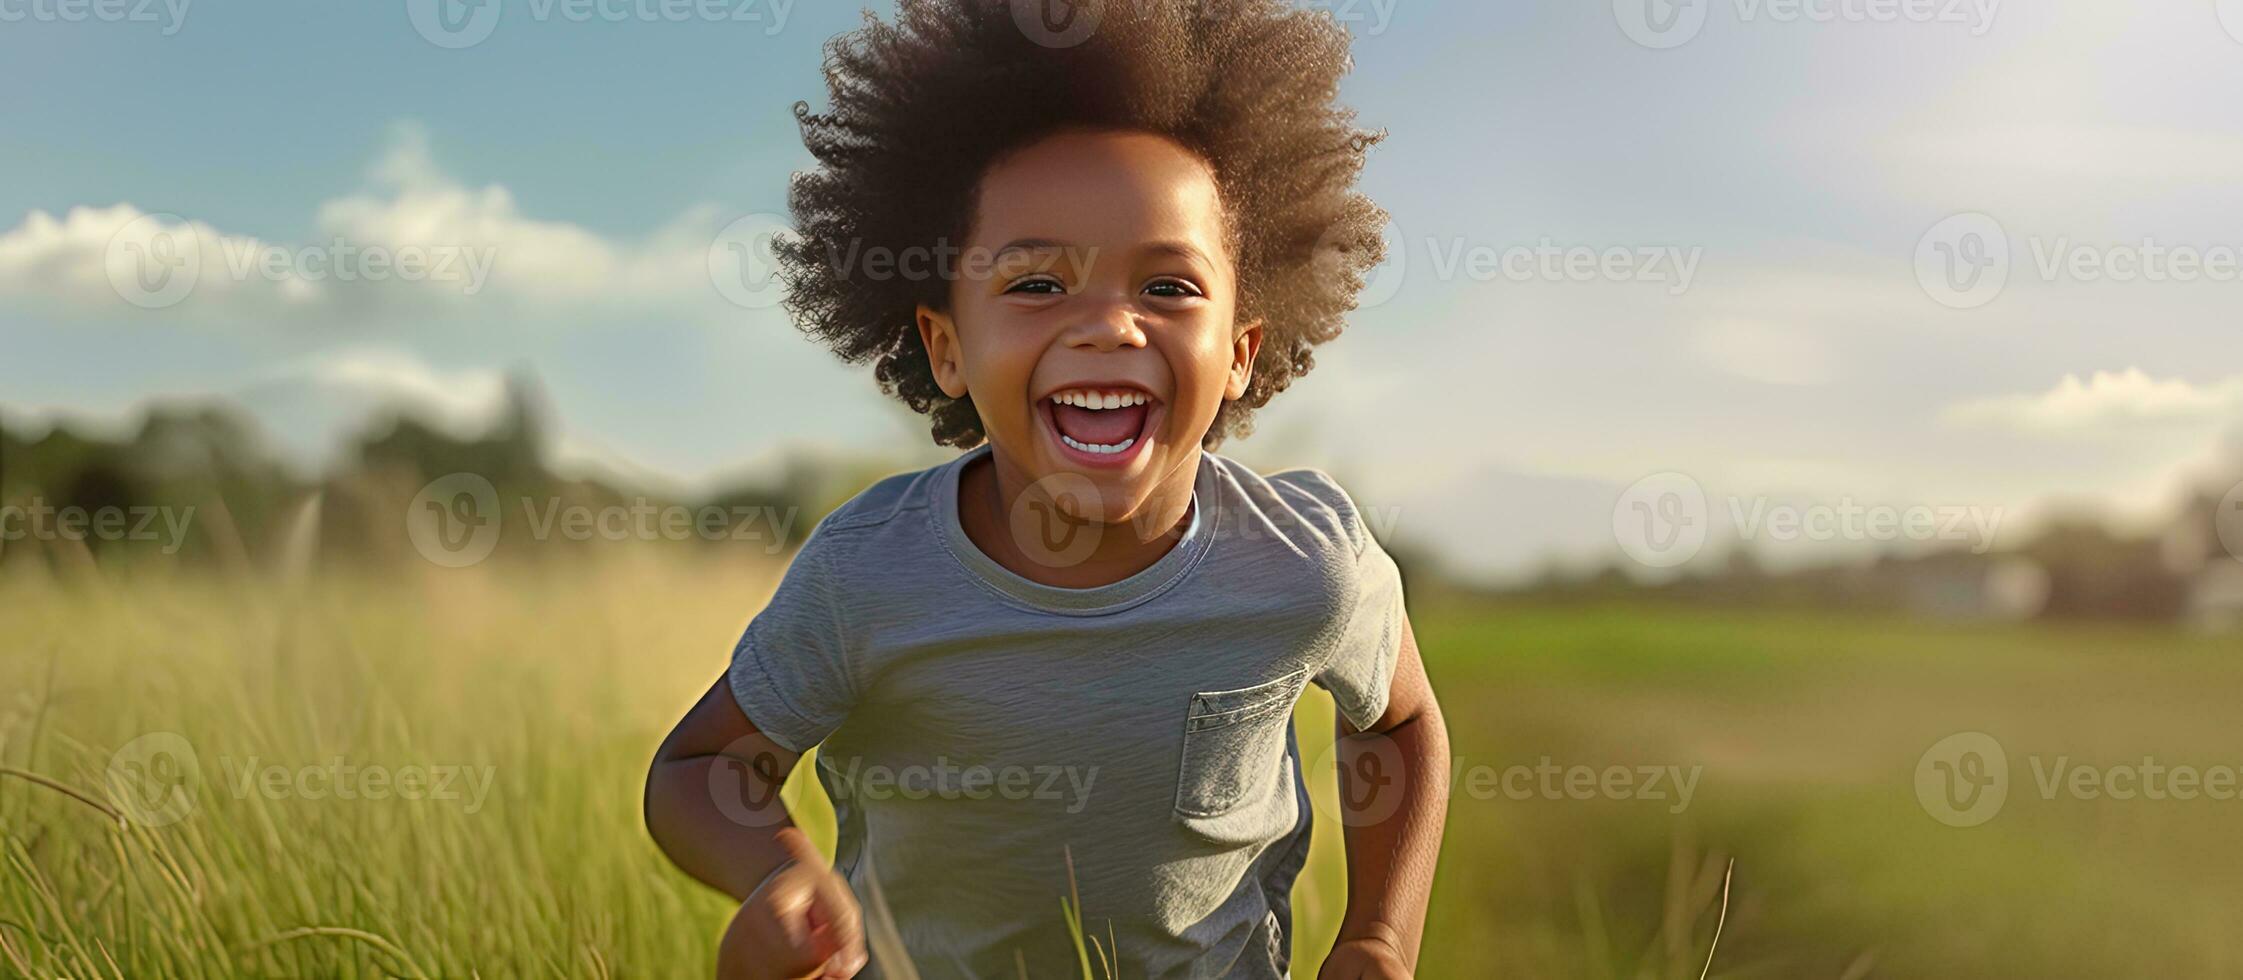 Active African American boy joyfully playing outdoors photo